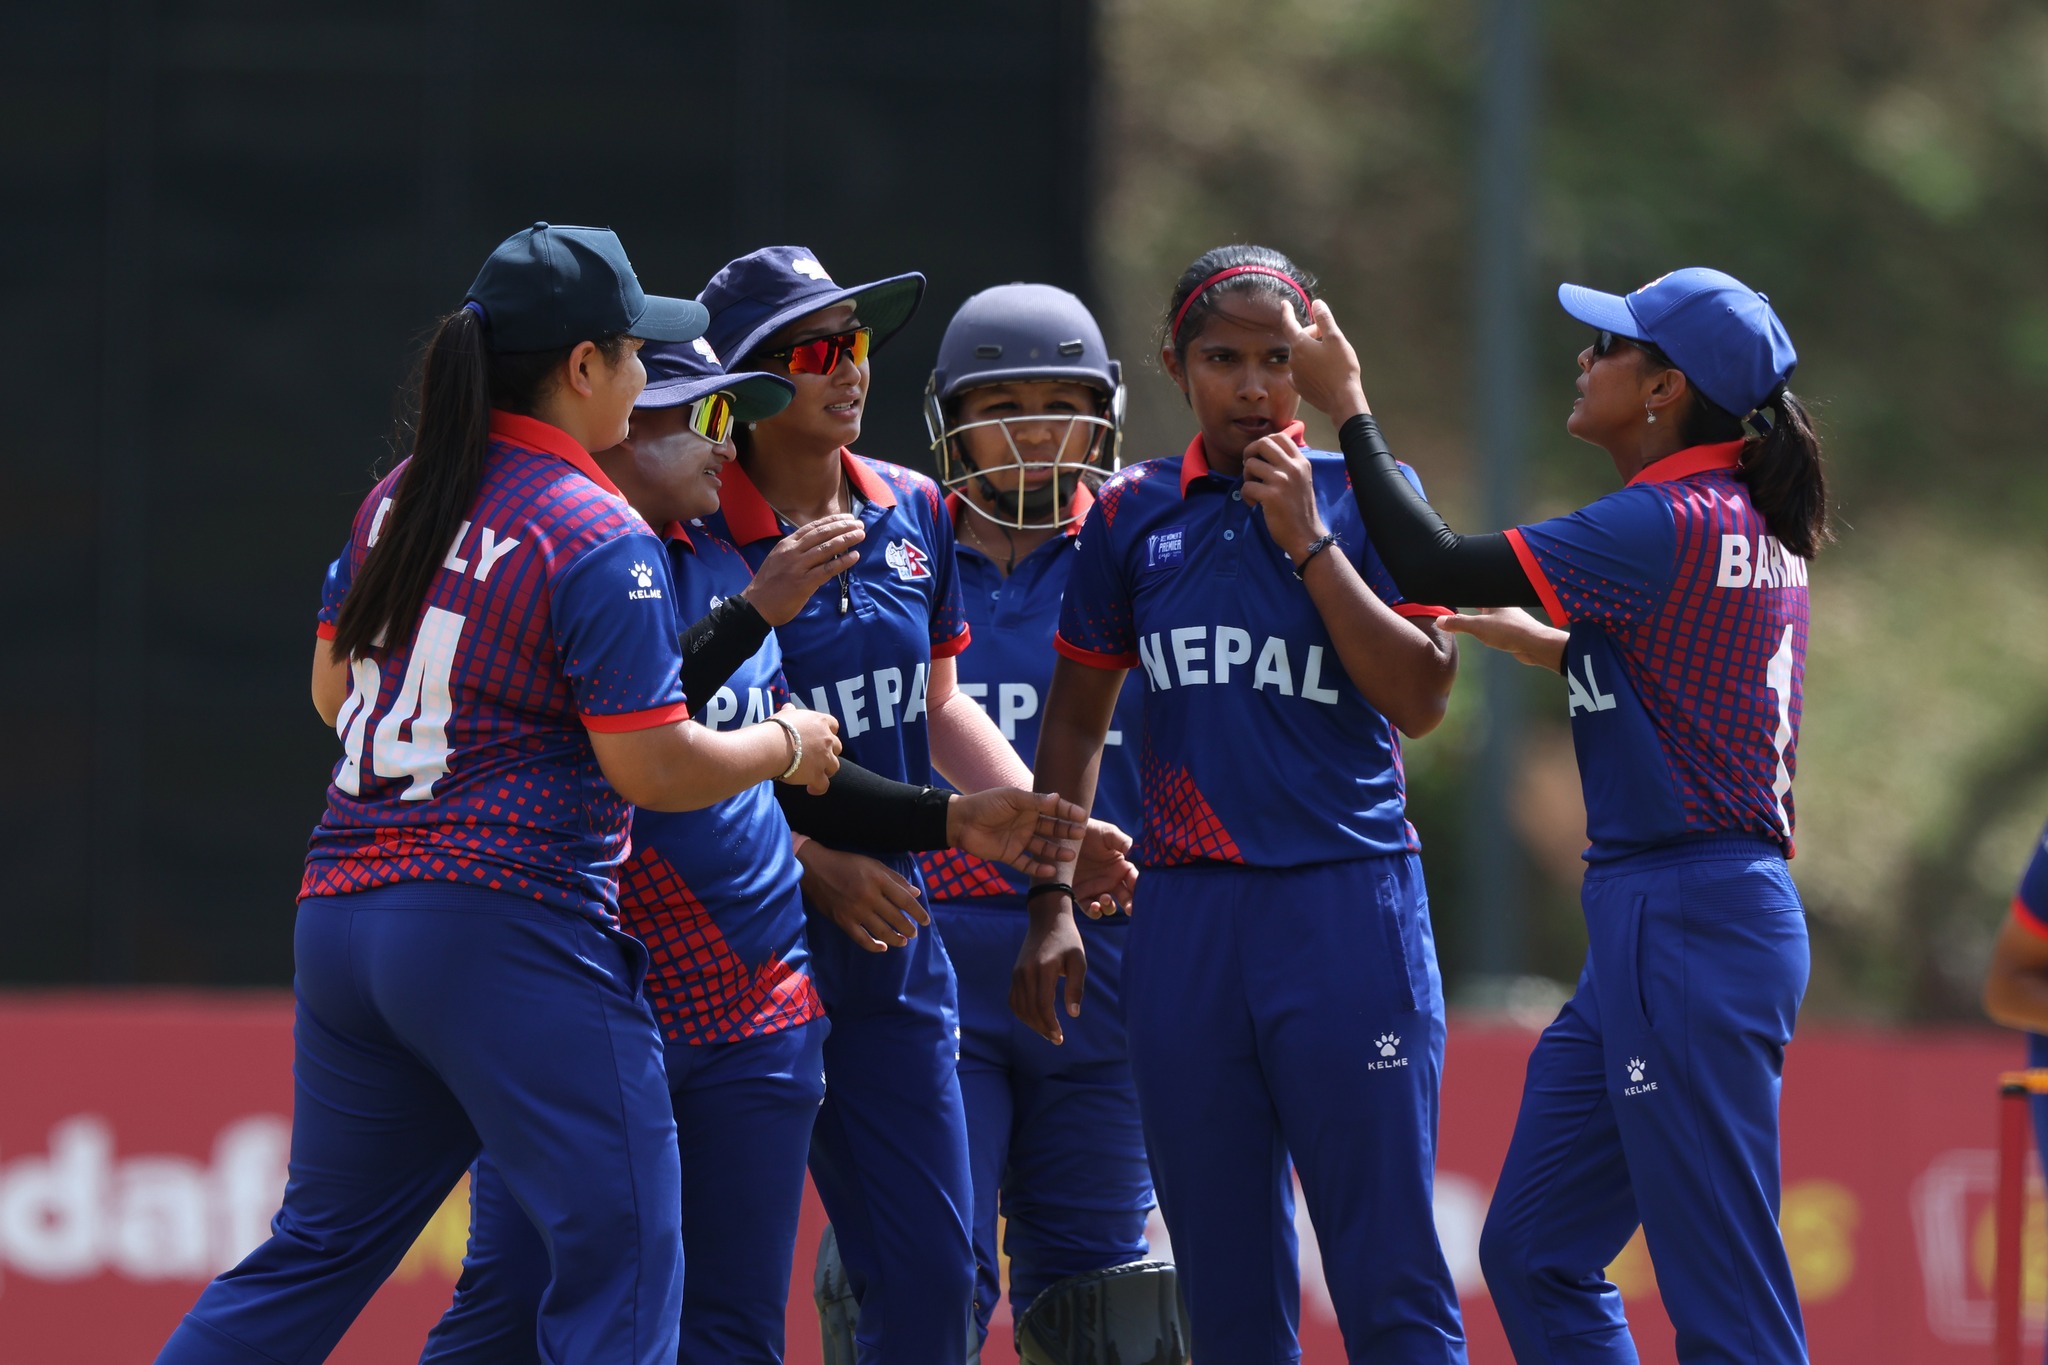 Nepal wins against Maldives by 214 runs, achieves milestone